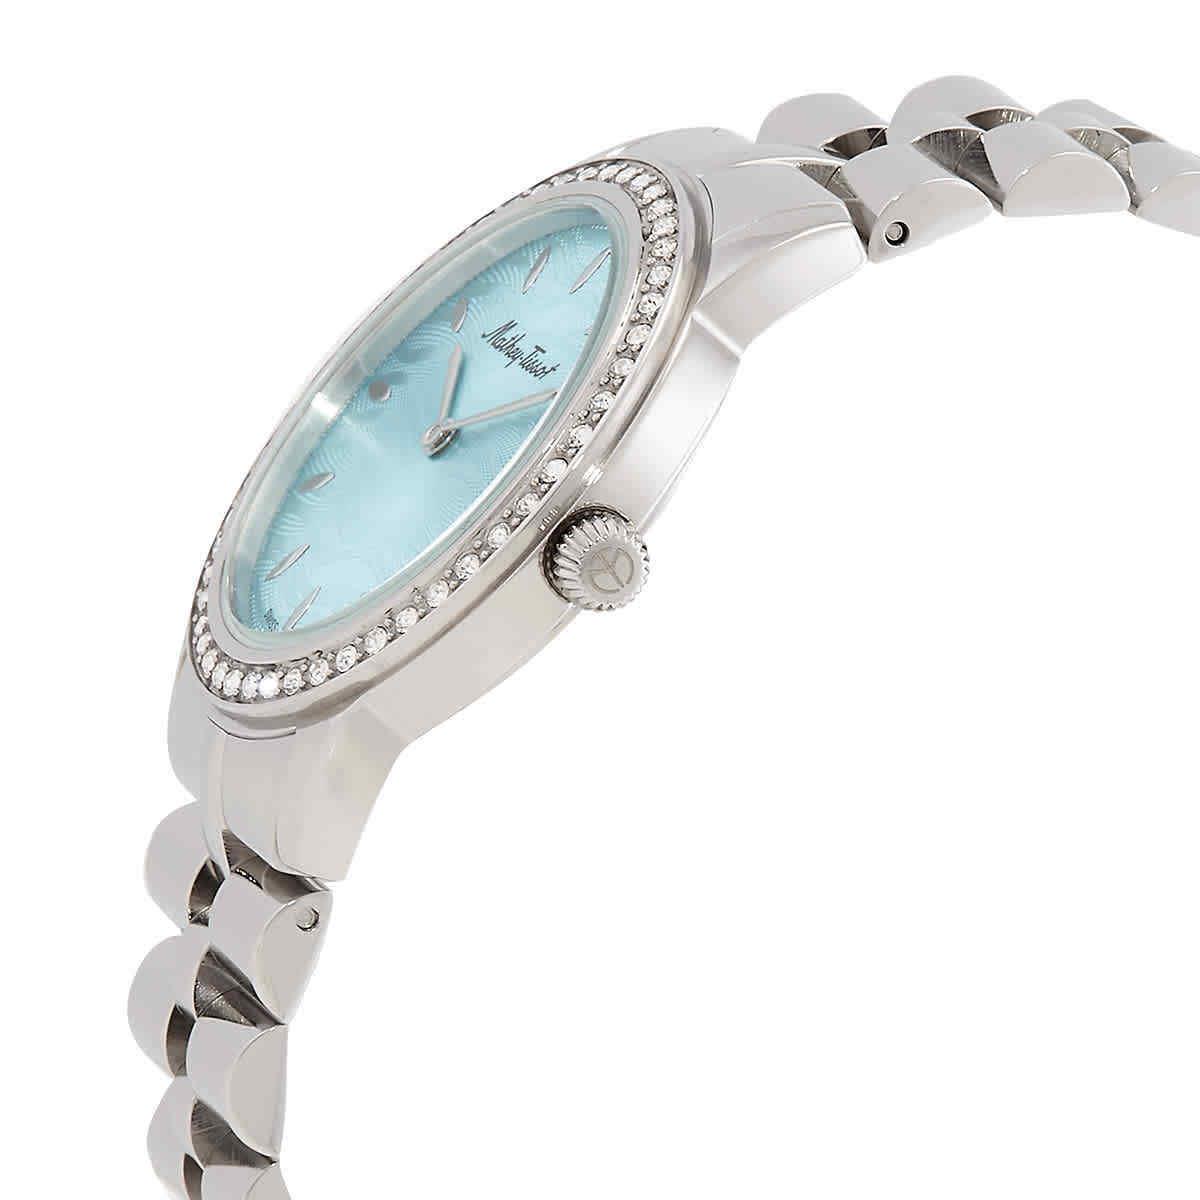 Mathey-tissot Artemis Quartz Blue Dial Ladies Watch D10860AQBU